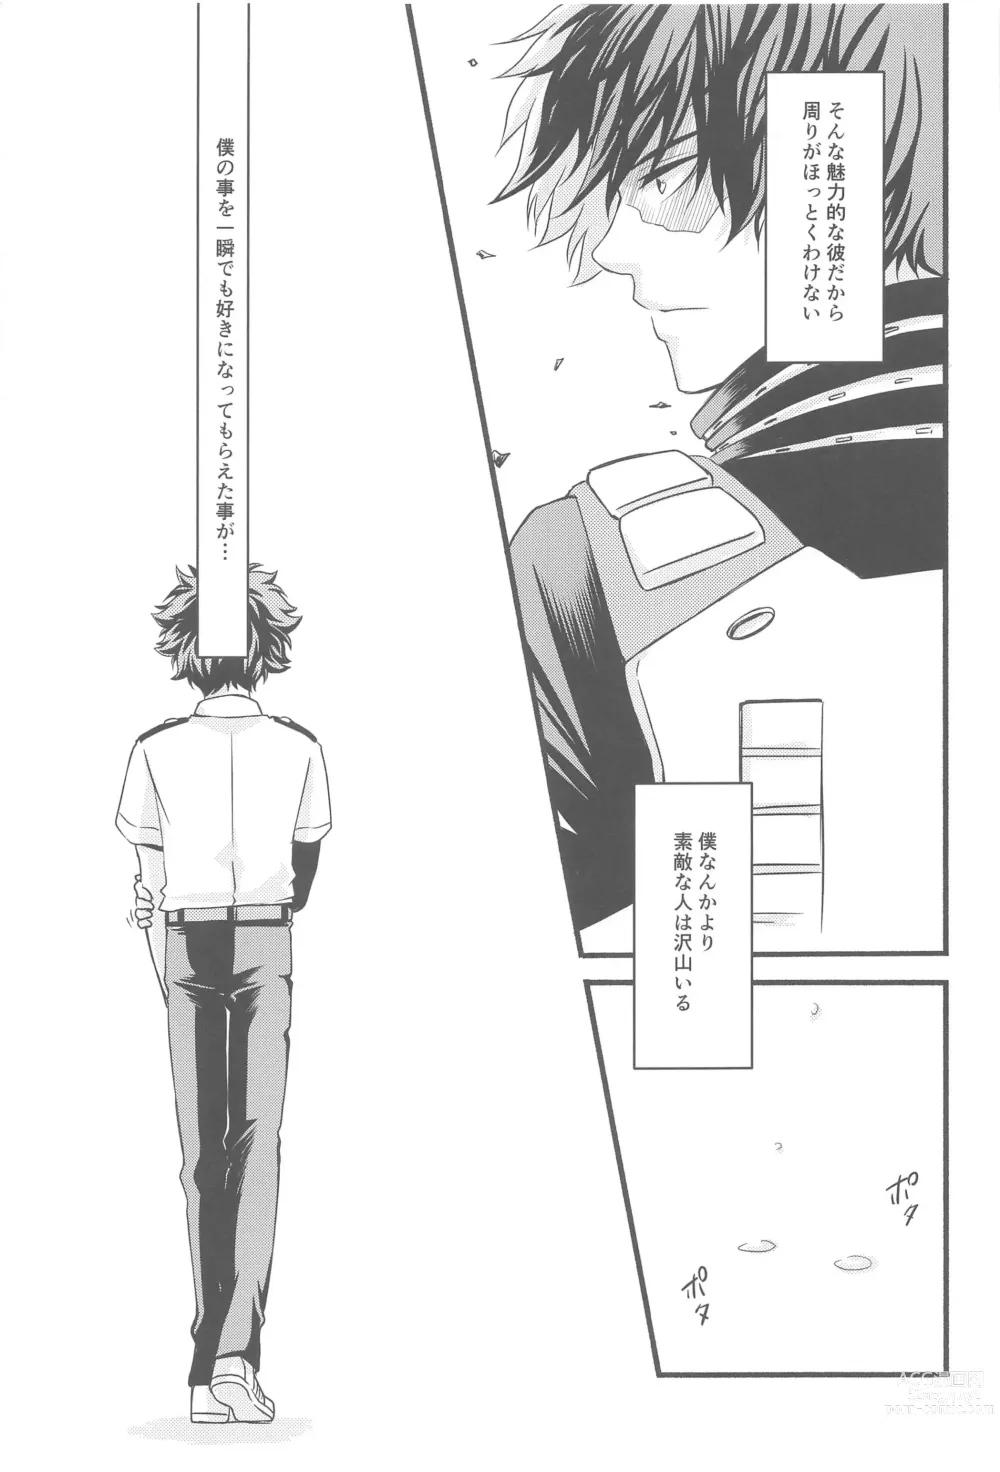 Page 20 of doujinshi Kimi no Heya